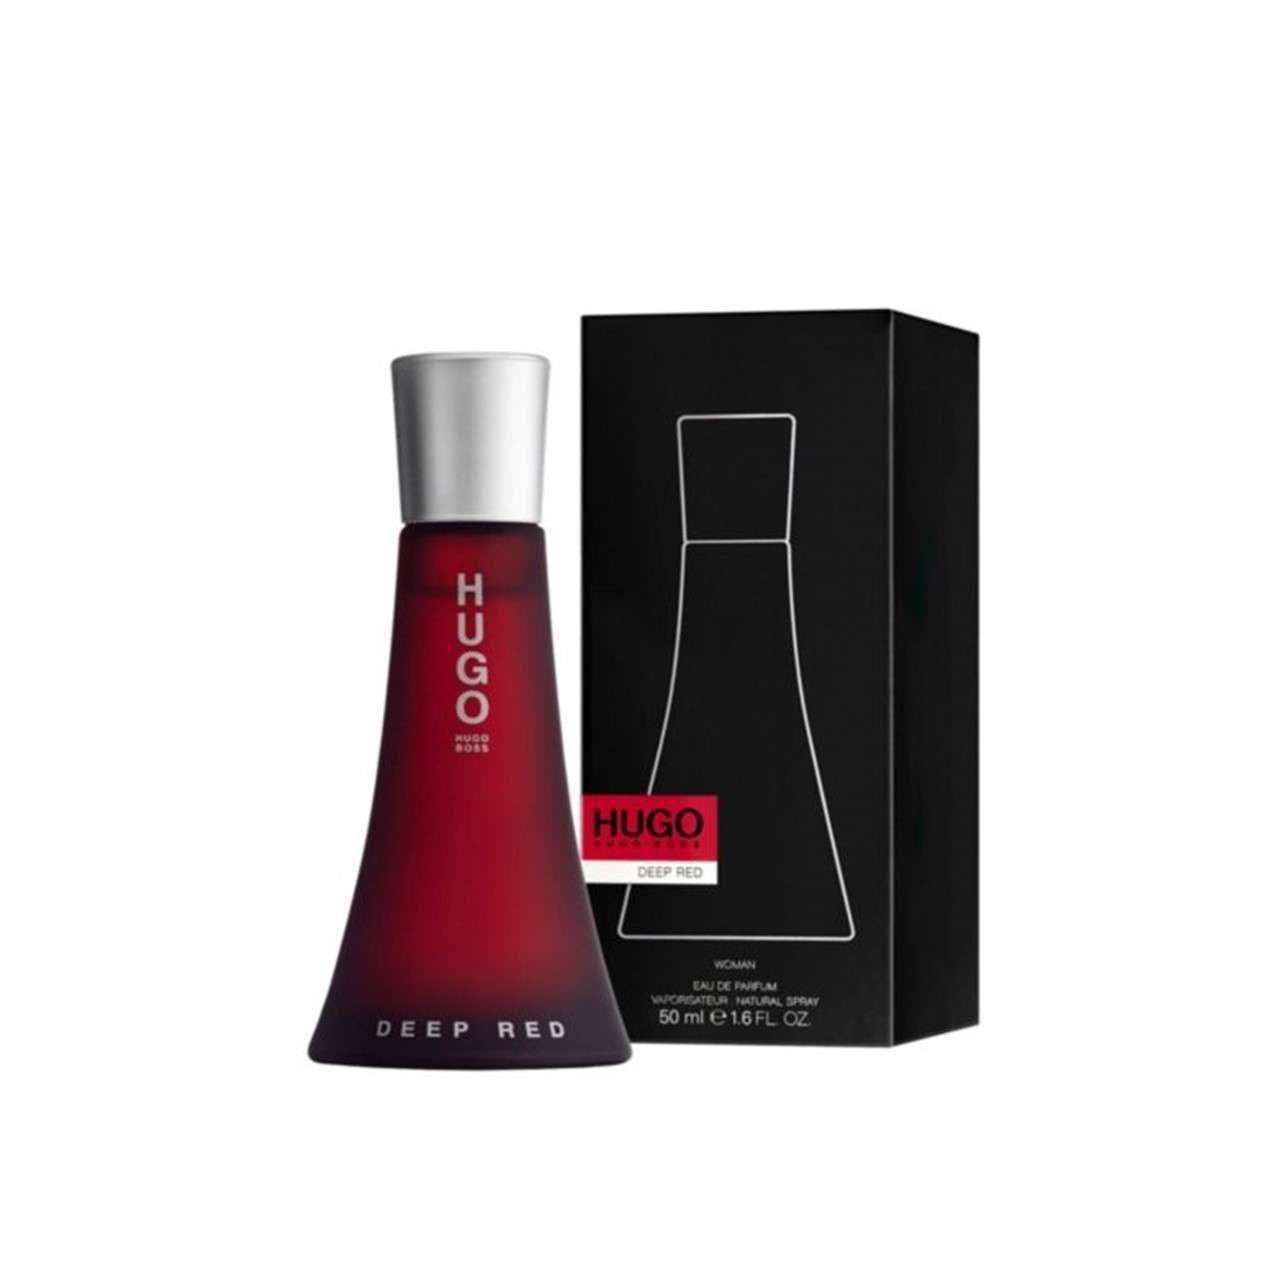 Hugo Boss Hugo Deep Red Woman Eau de Parfum 50ml (1.7fl oz)